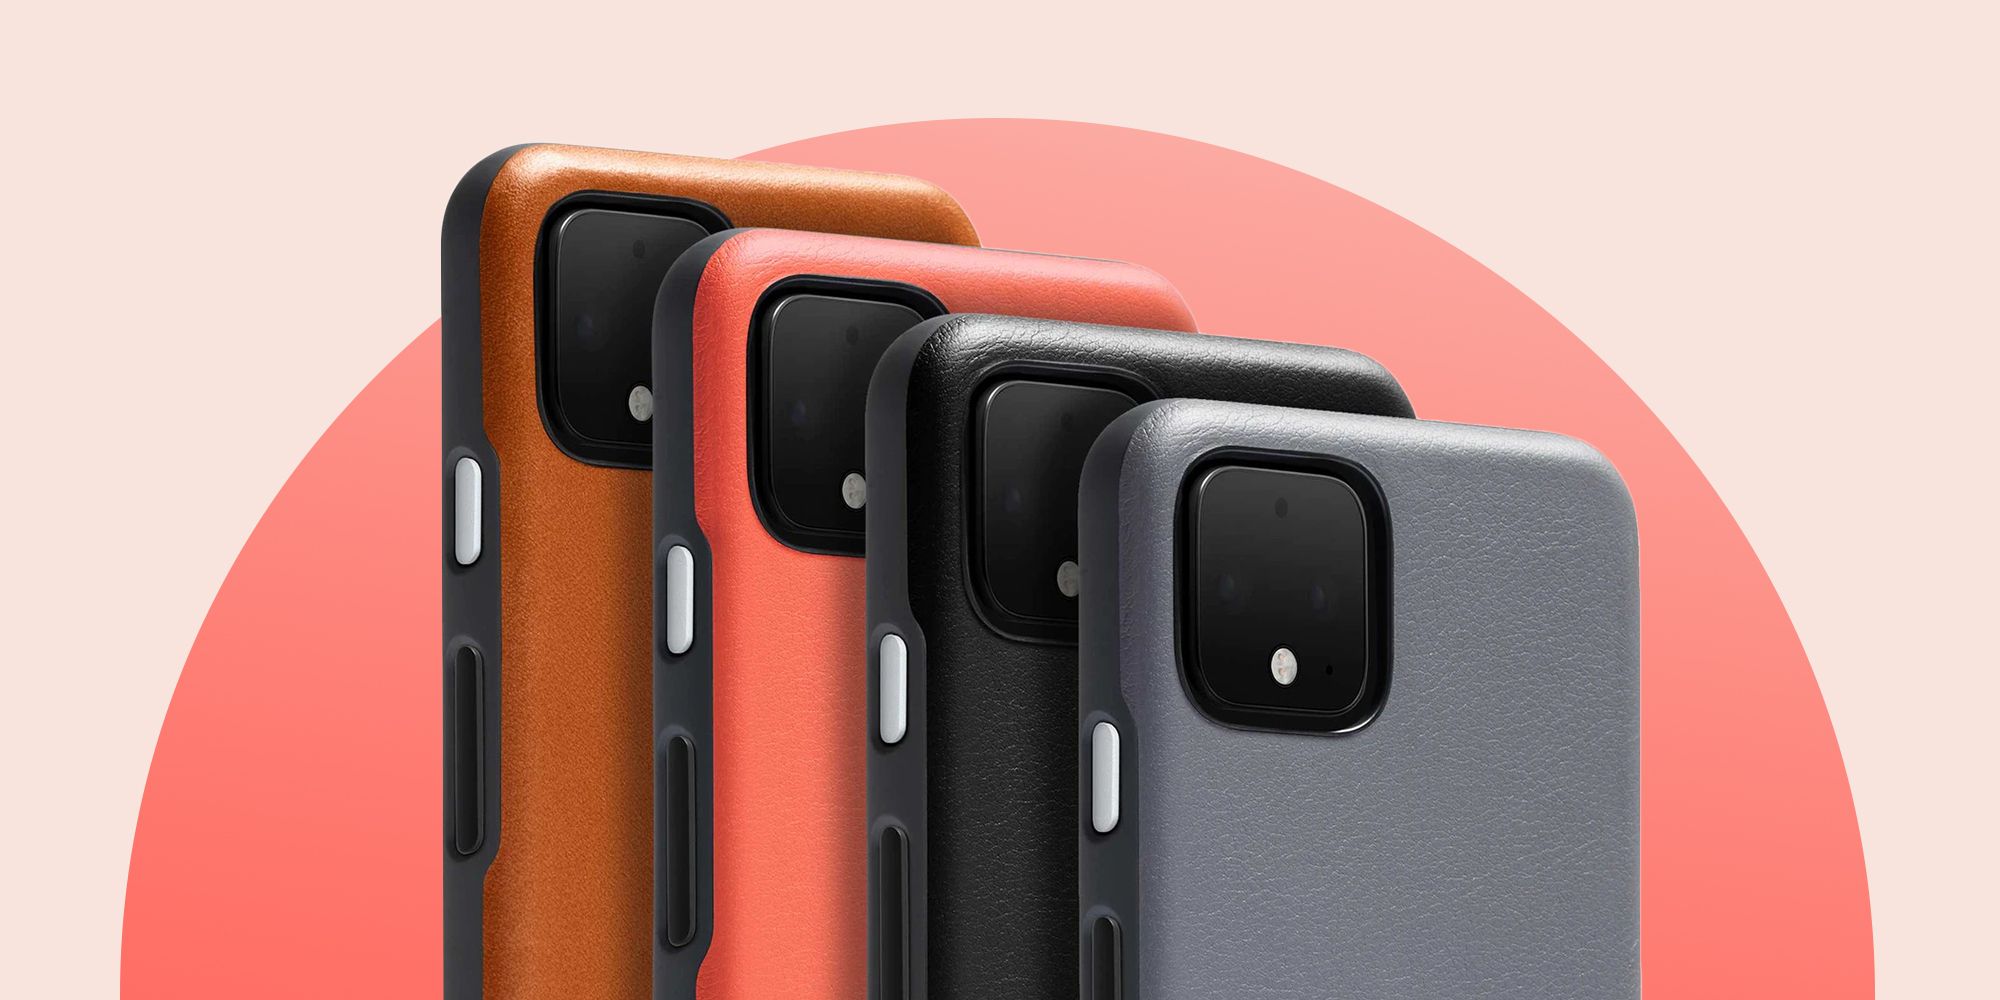 9 Best Designer iPhone X Cases to Buy in 2018 - Designer Cases for